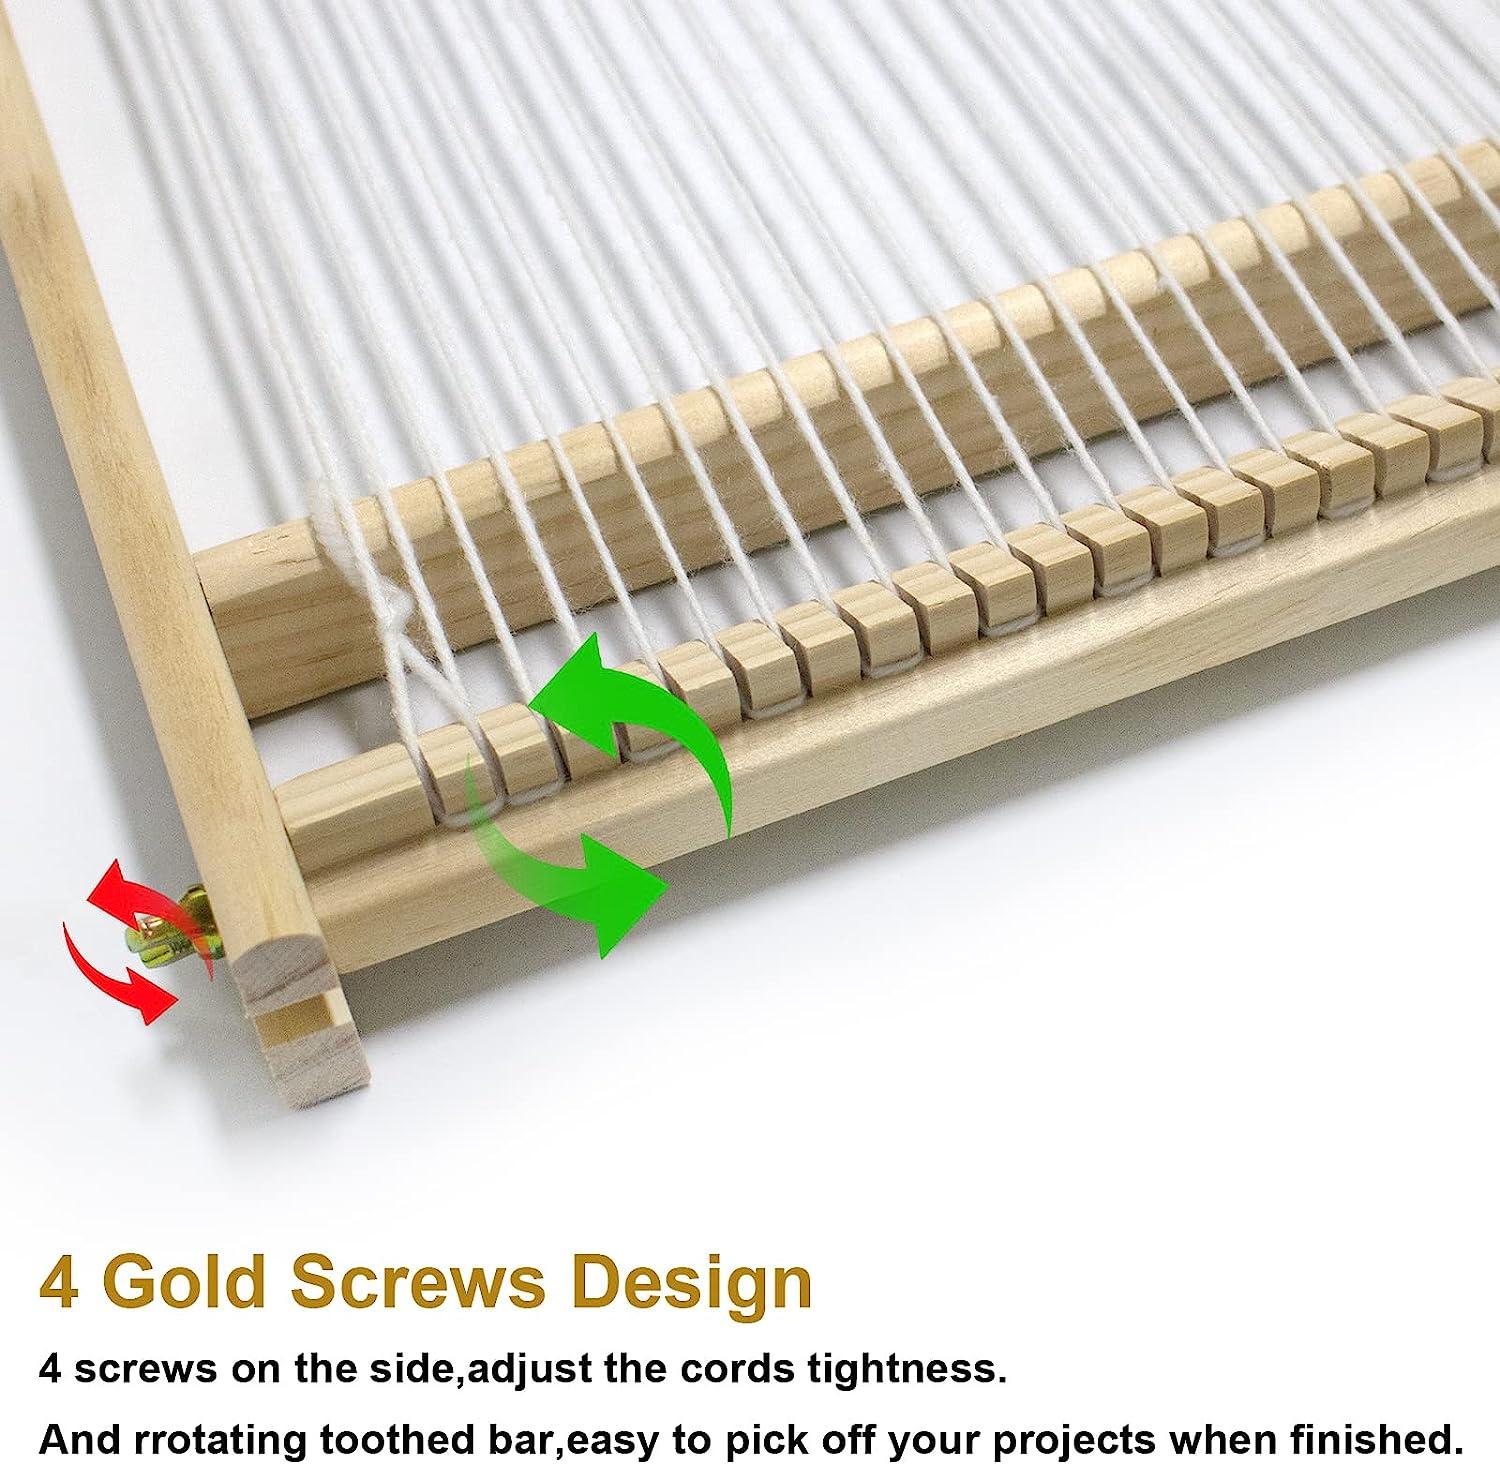 SagaSave Children's Wooden Loom Kit DIY Hand-Knitting Machine for Tapestry  Weaving Beginners Kids Adults